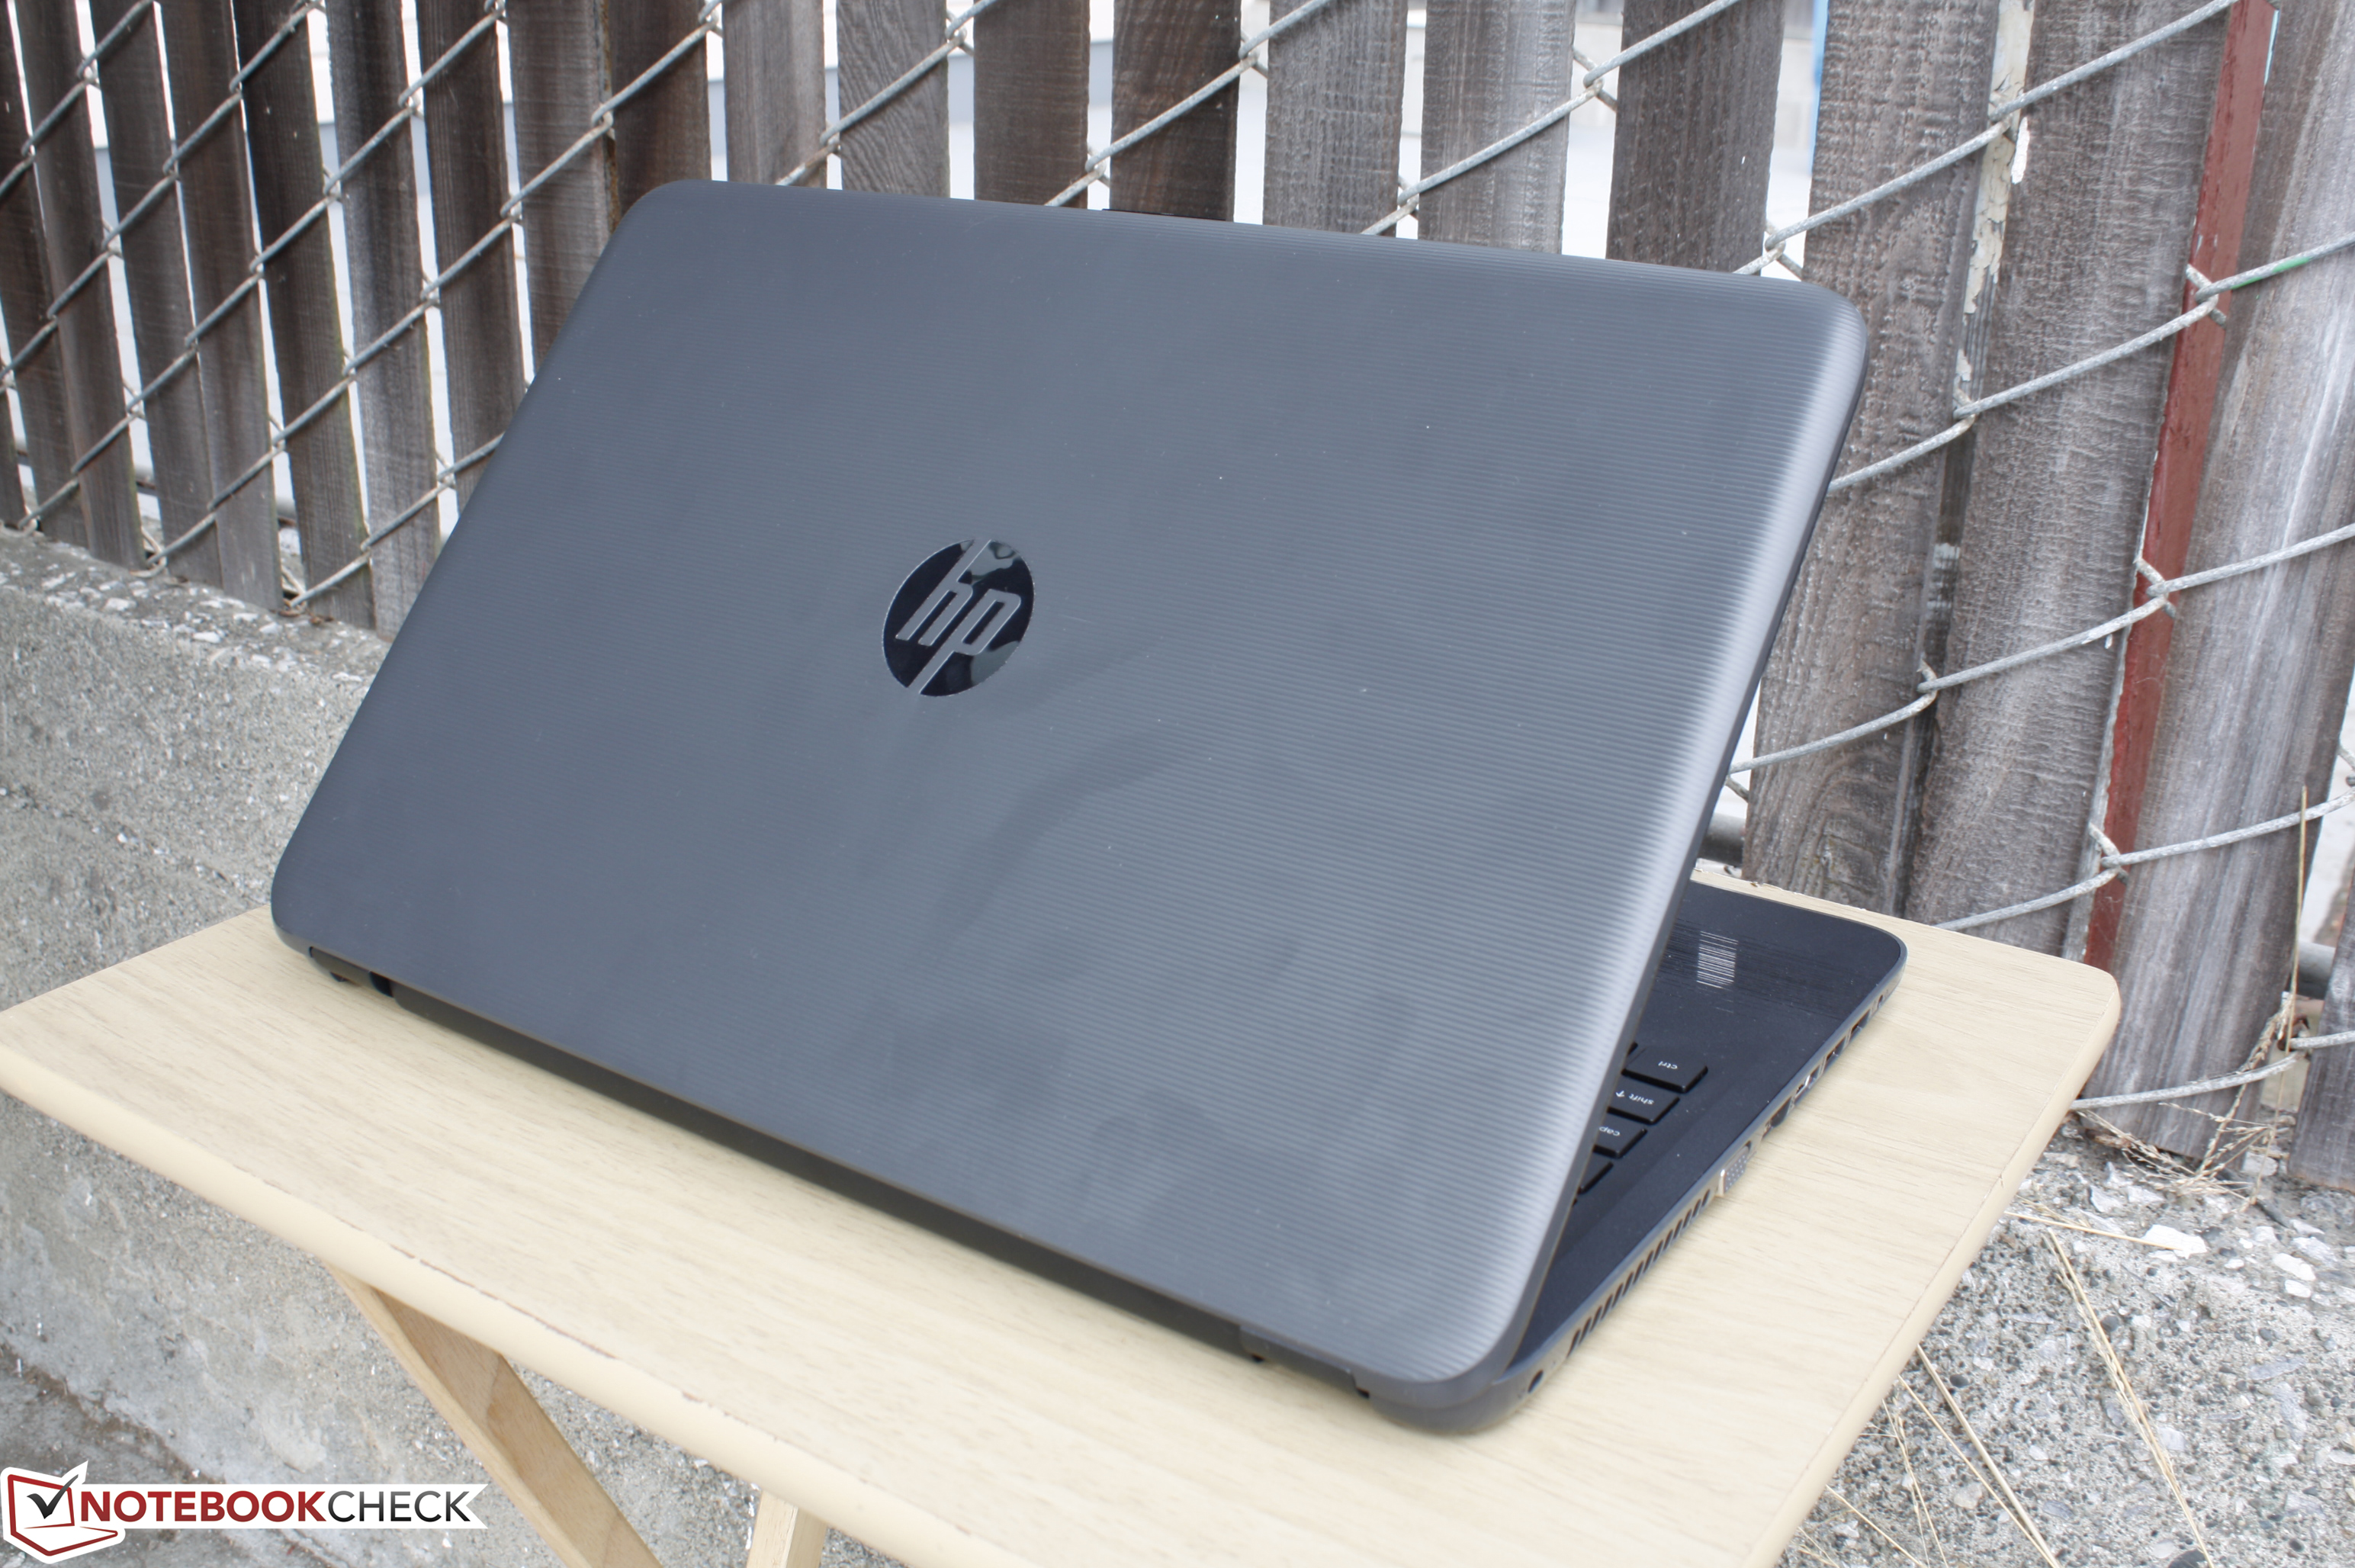 Ноутбук Hp 250 G6 Цена